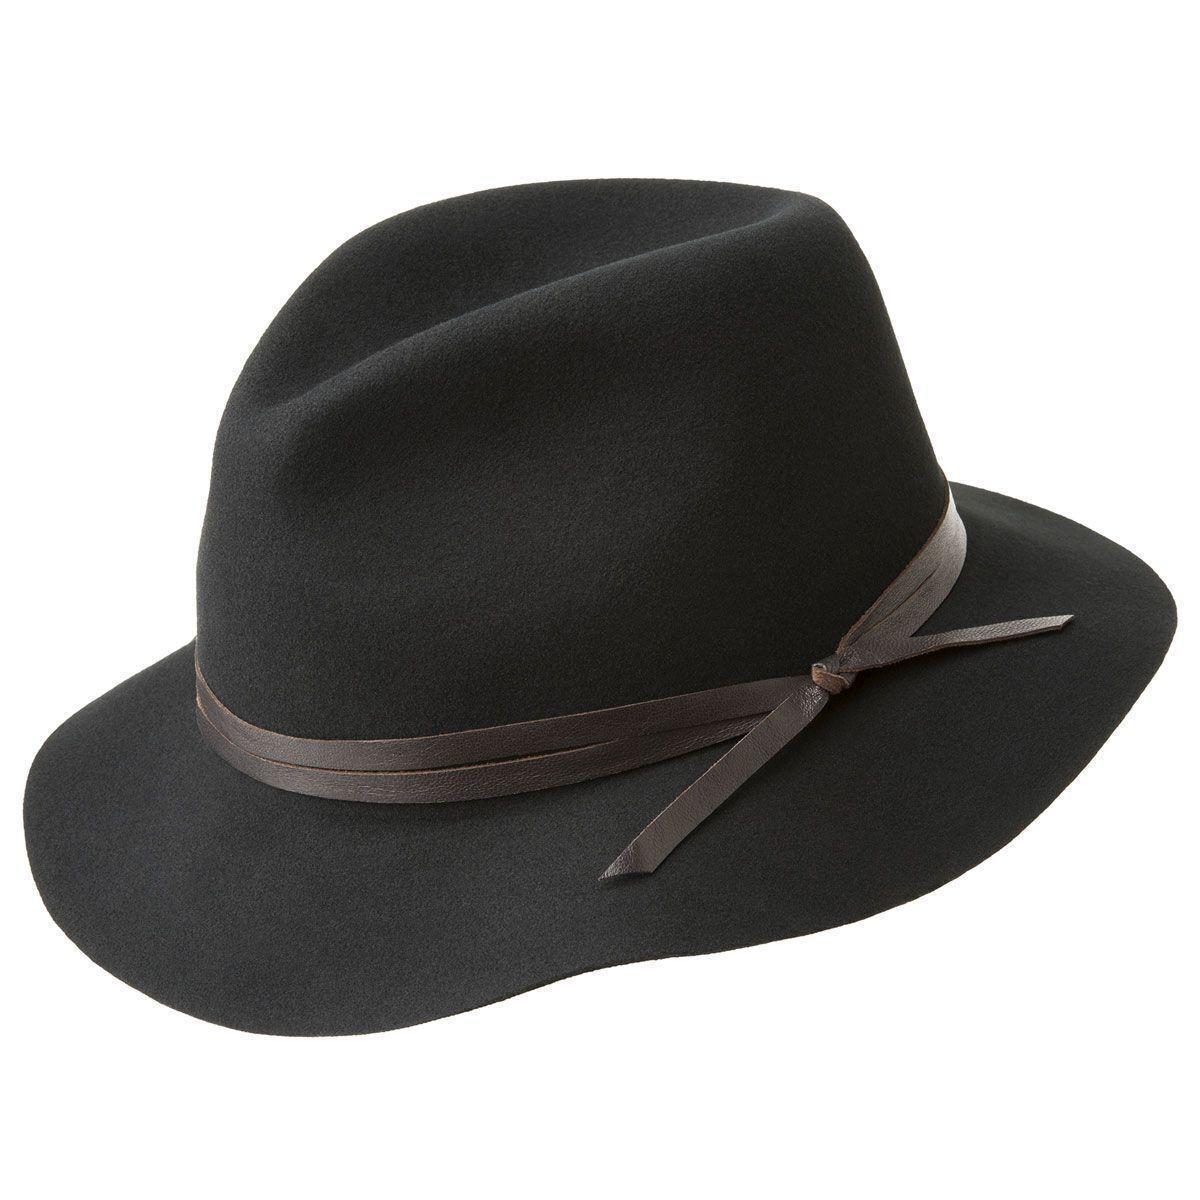 BAILEY Obie 100% Wool Felt Travel Hat Warm MADE IN USA Crushable 1371 Fedora - Black - S